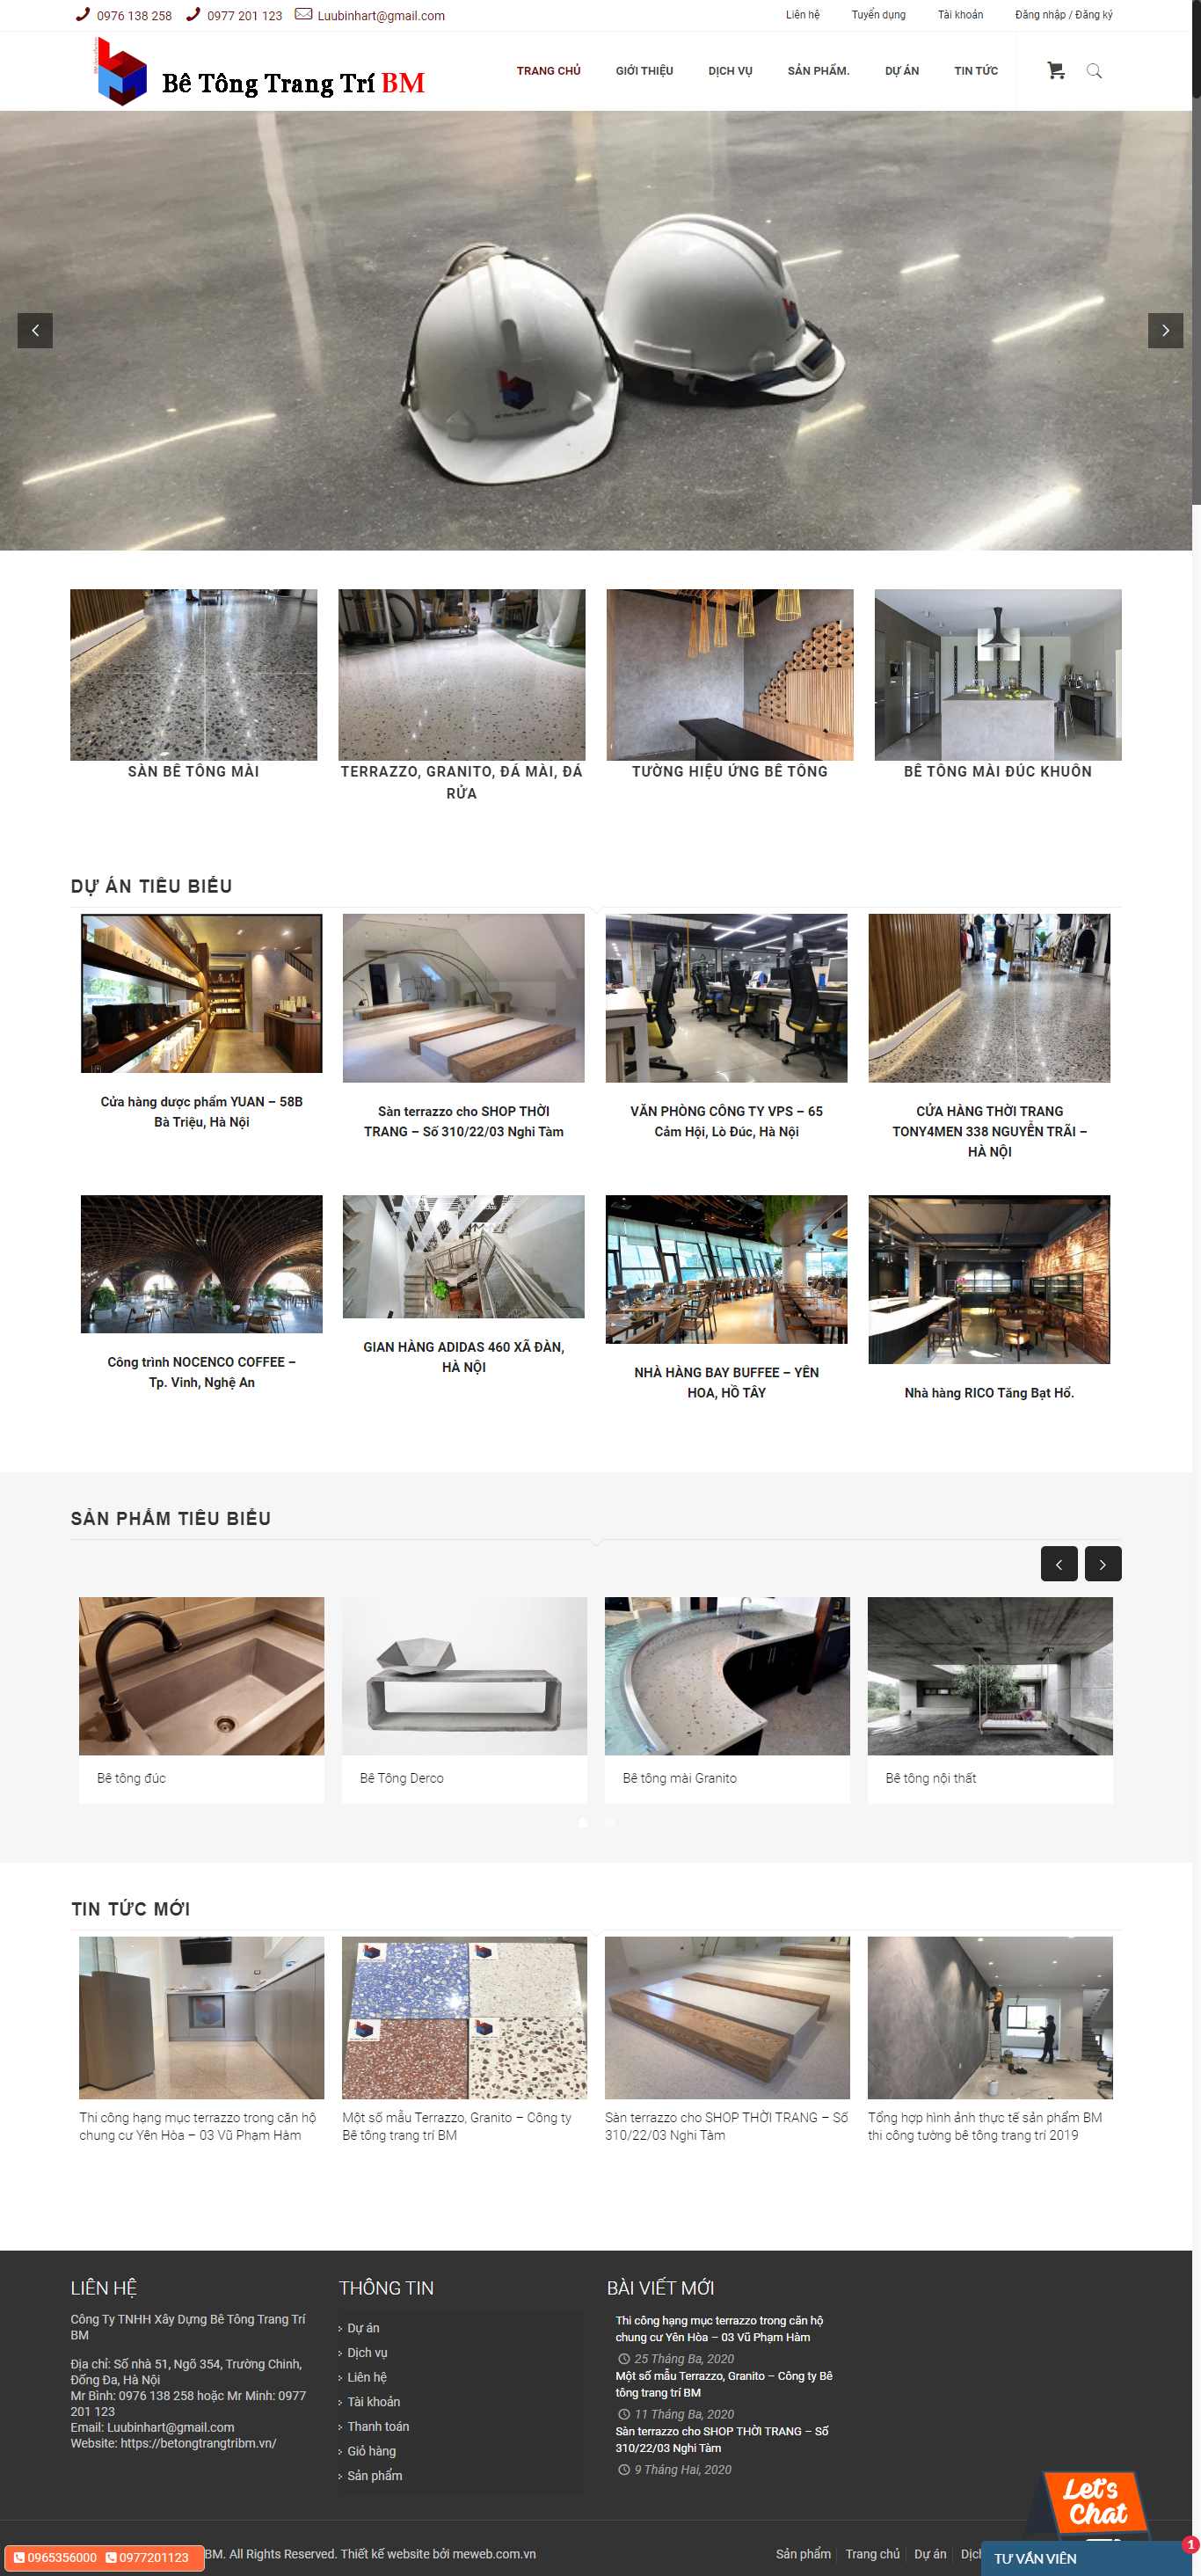 Thiết kế Website bê tông - betongtrangtribm.vn